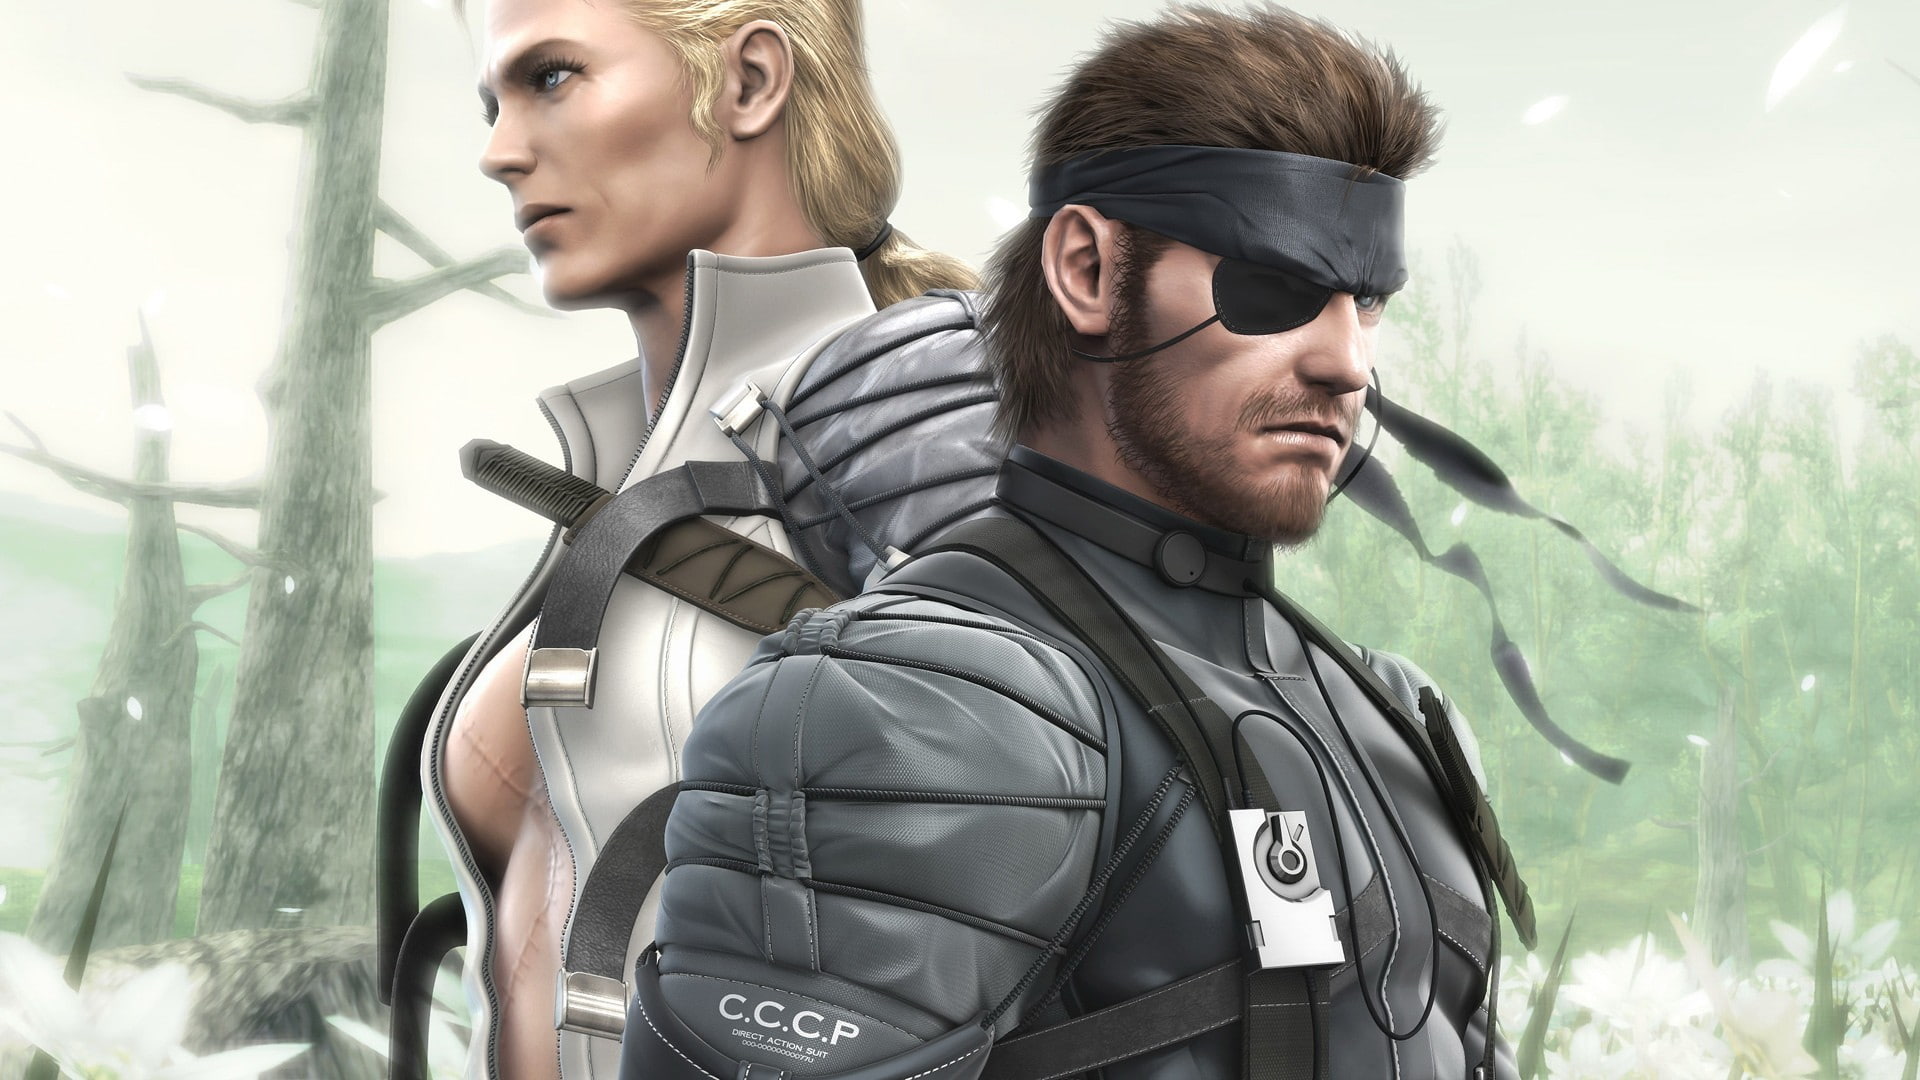 Big Boss, Metal Gear Solid, The Boss, Metal Gear Solid 3: Snake Eater